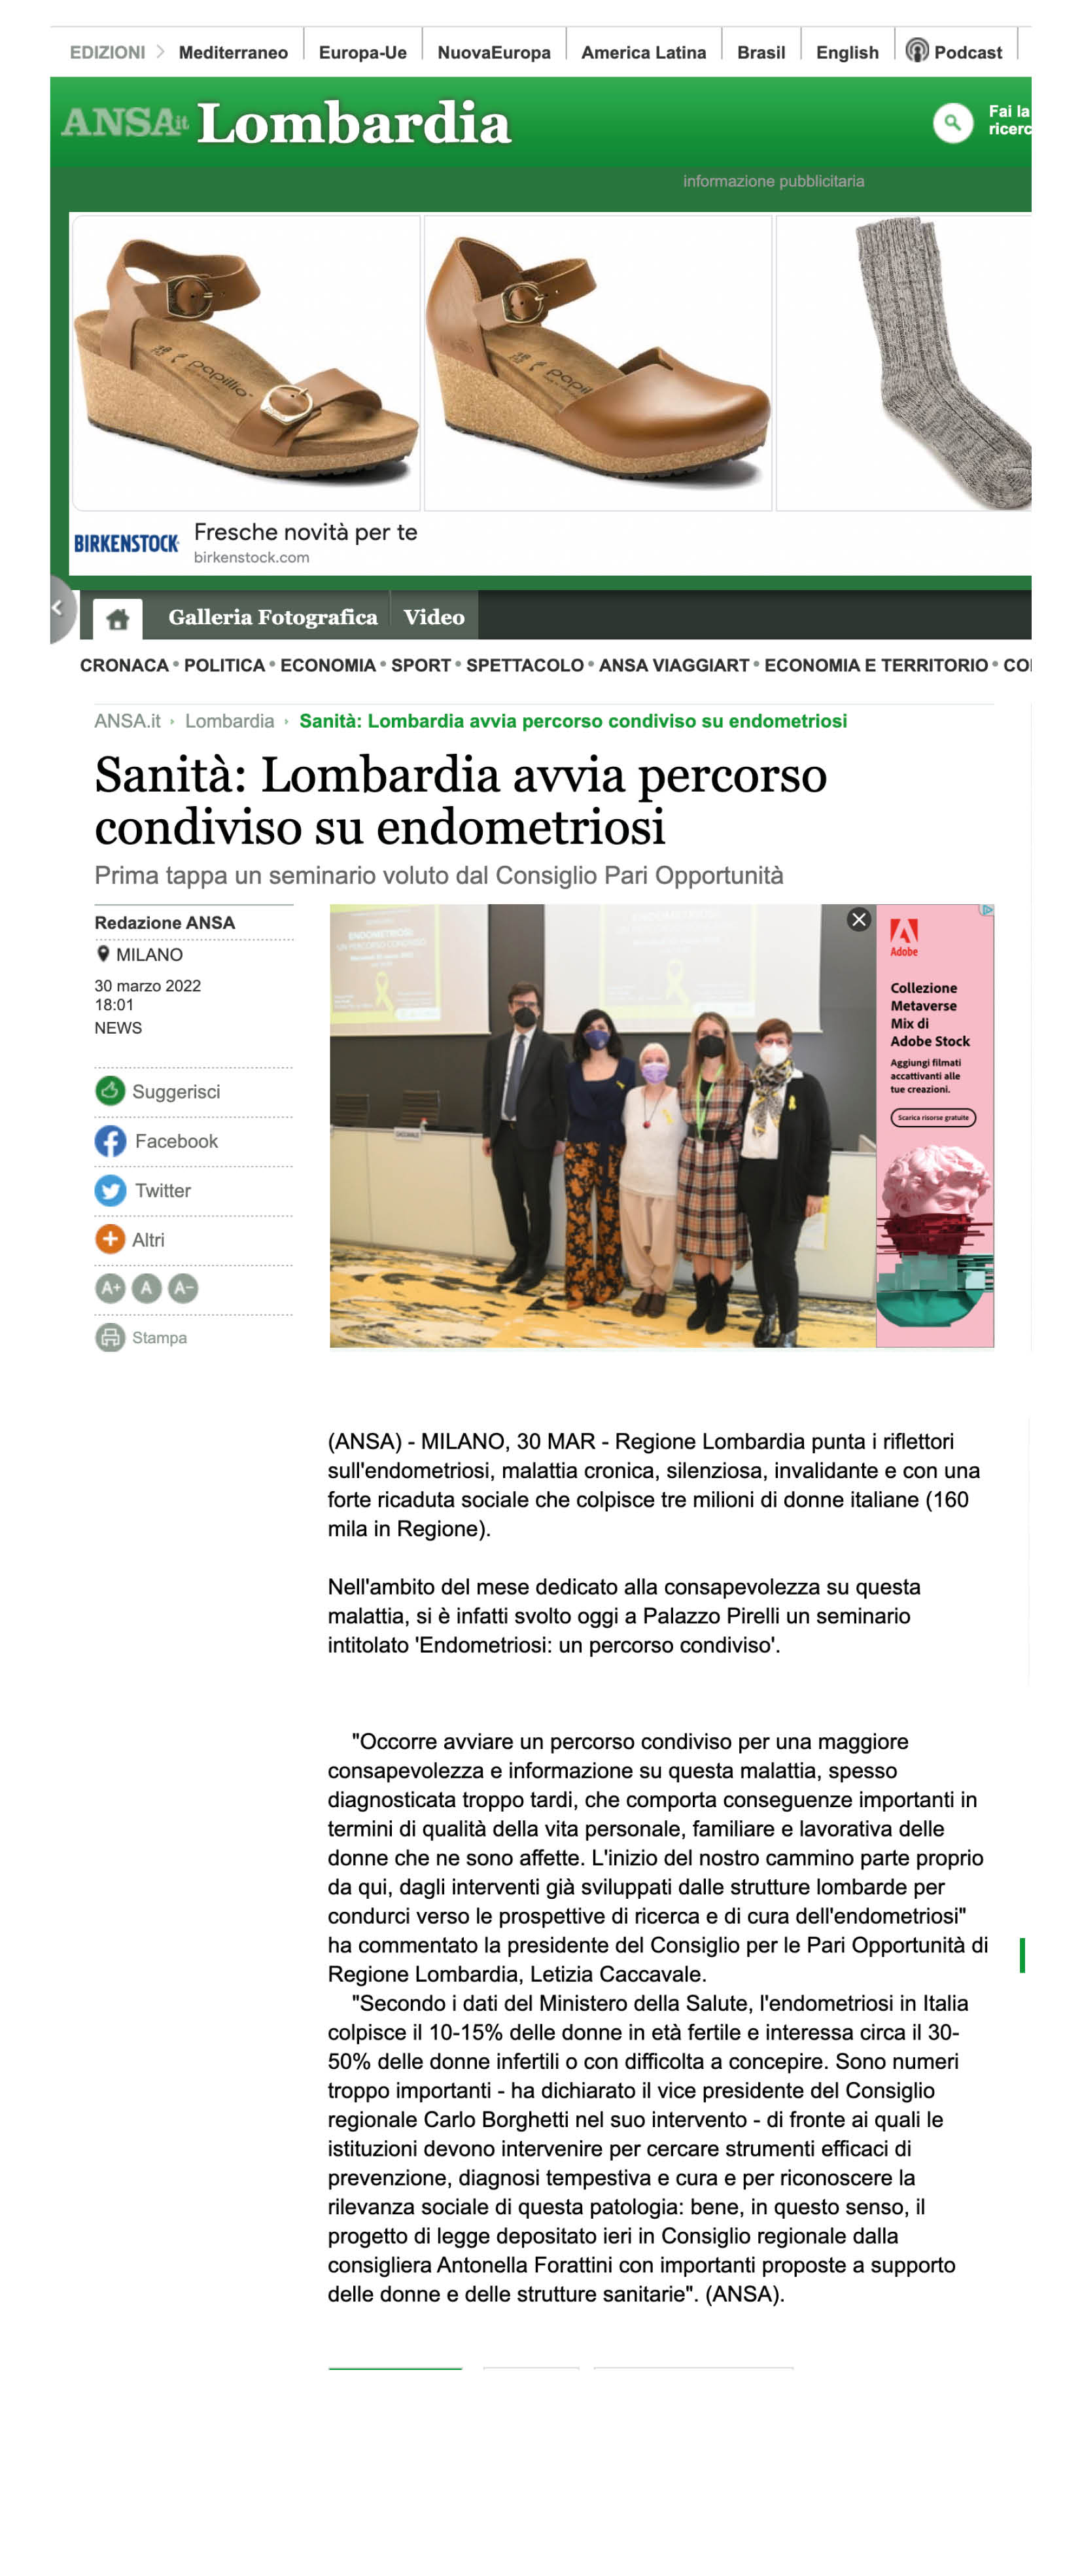 Sanità Lombardia avvia percorso condiviso su endometriosi Lombardia ANSA